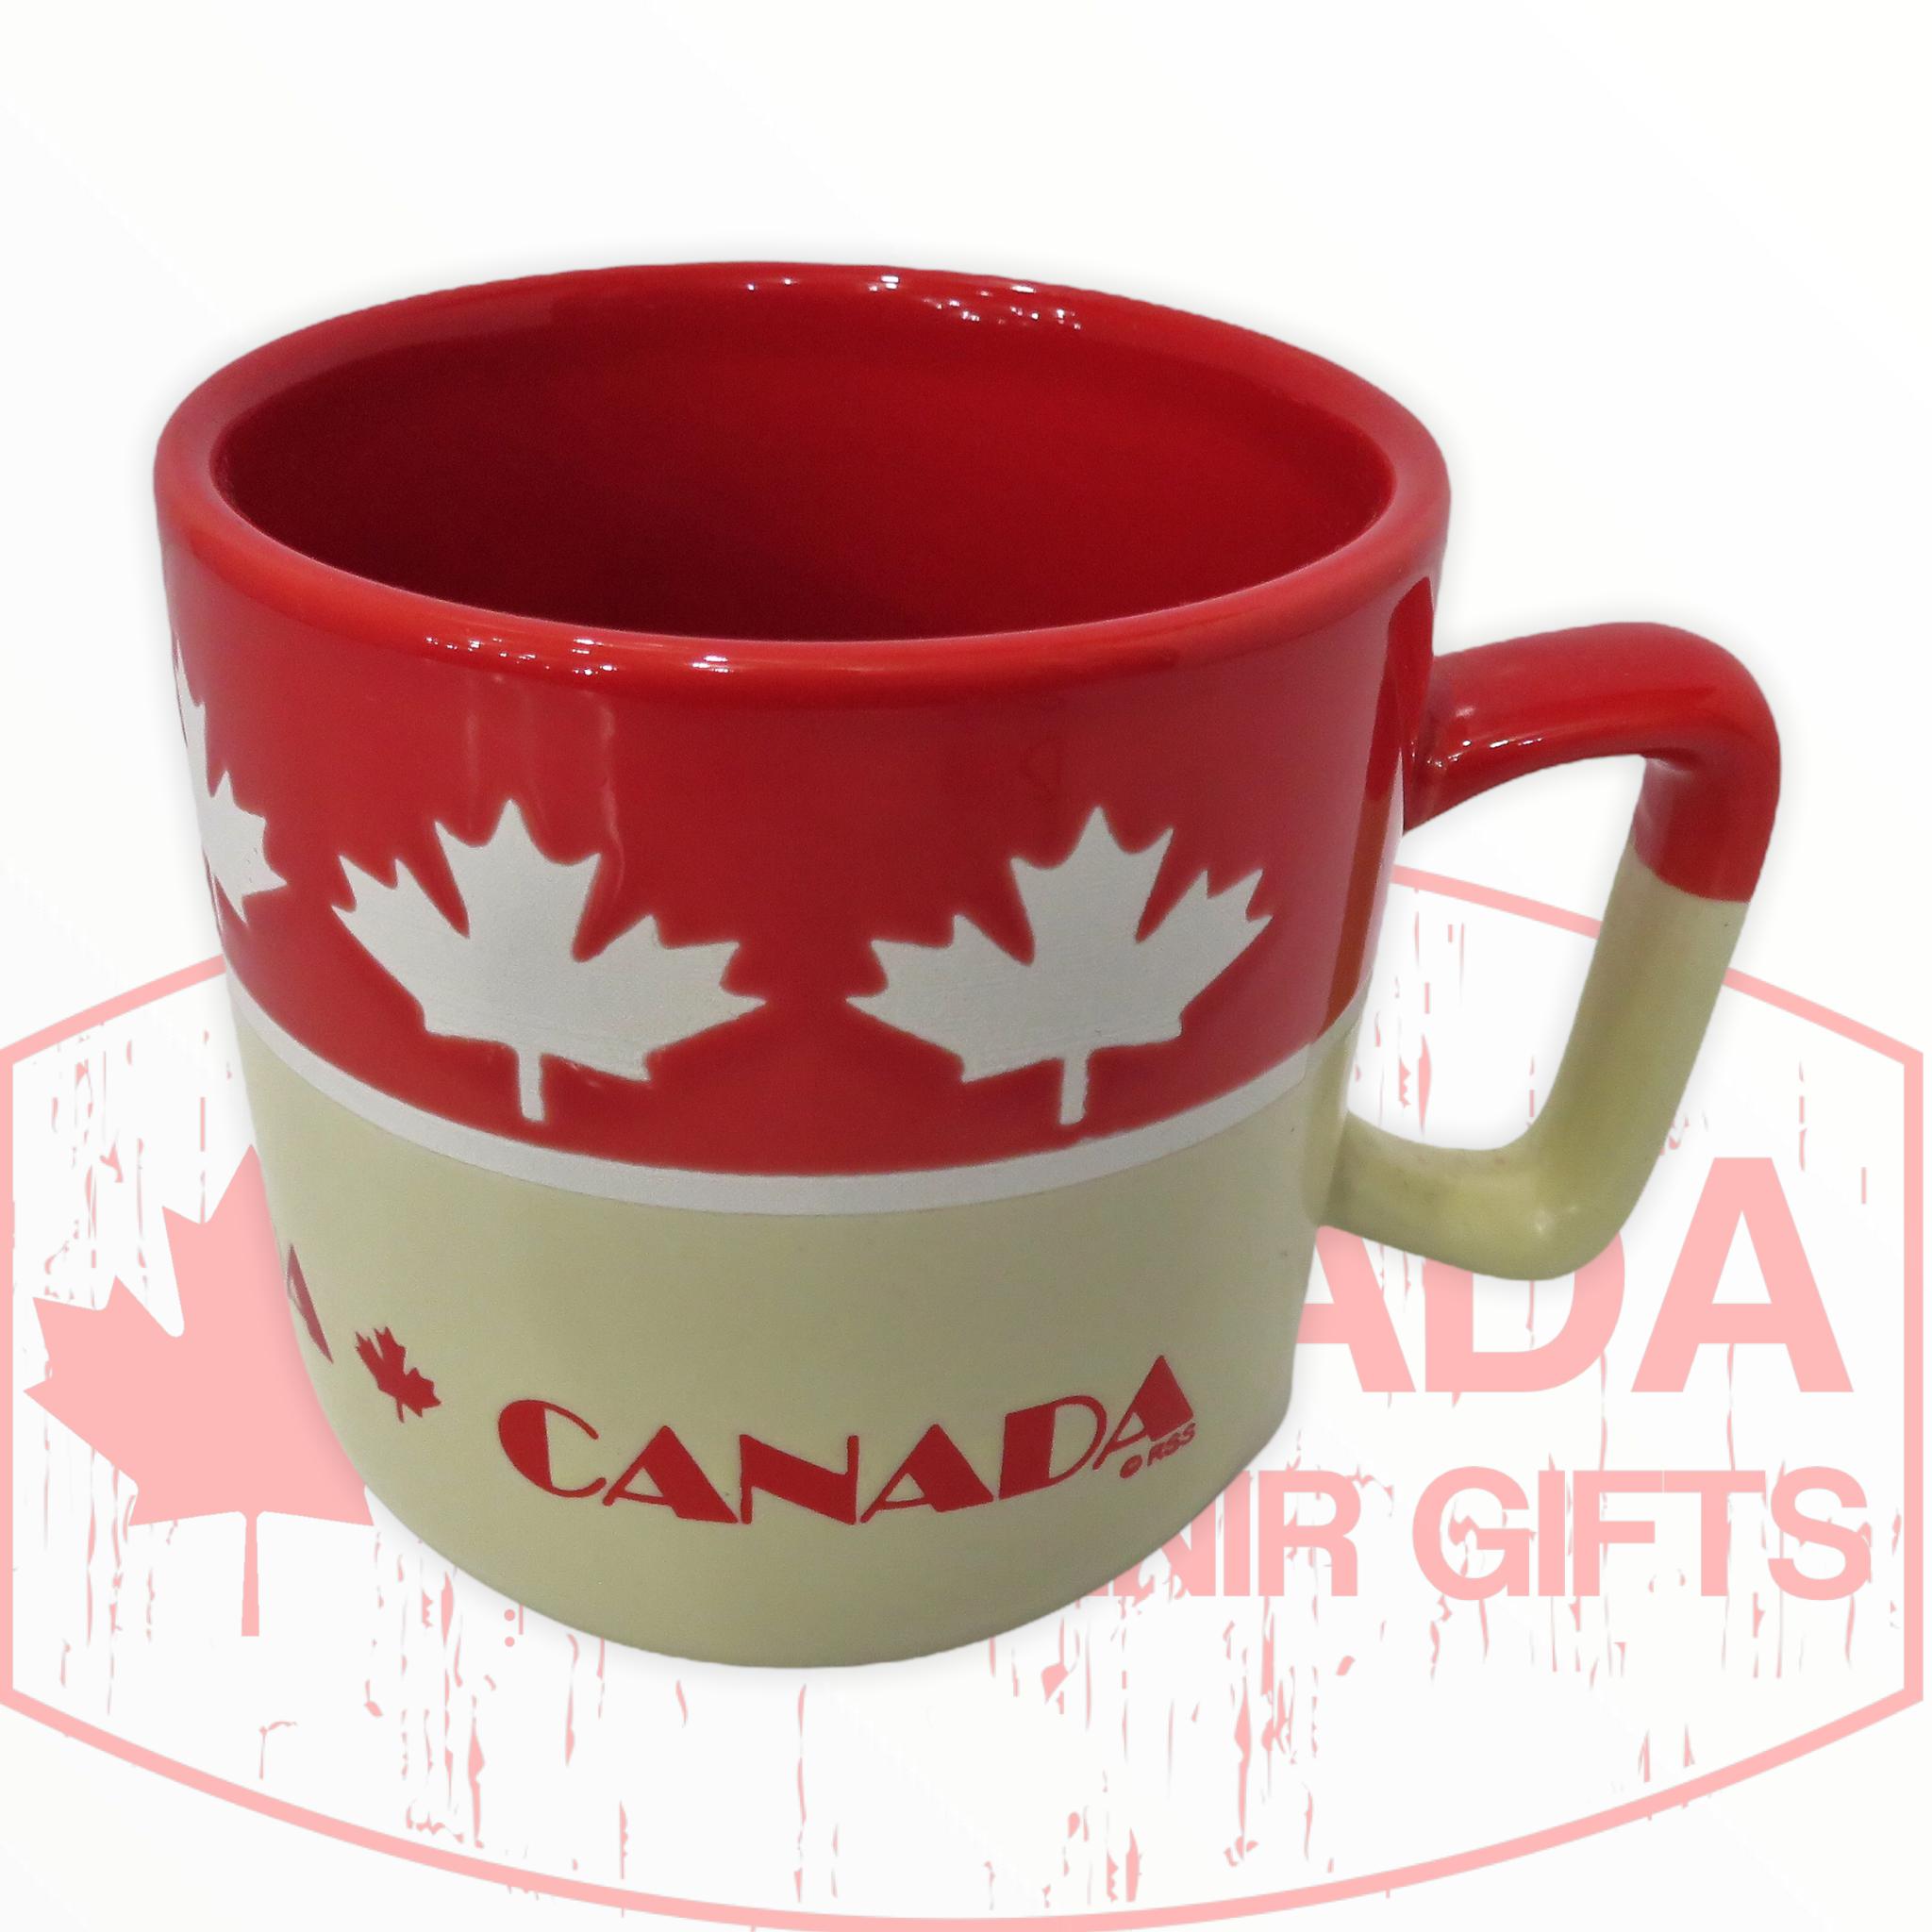 14 oz Large Mug Ceramic Coffee Tea Glass Cup Maple Leaf Canada (Red & Cream)